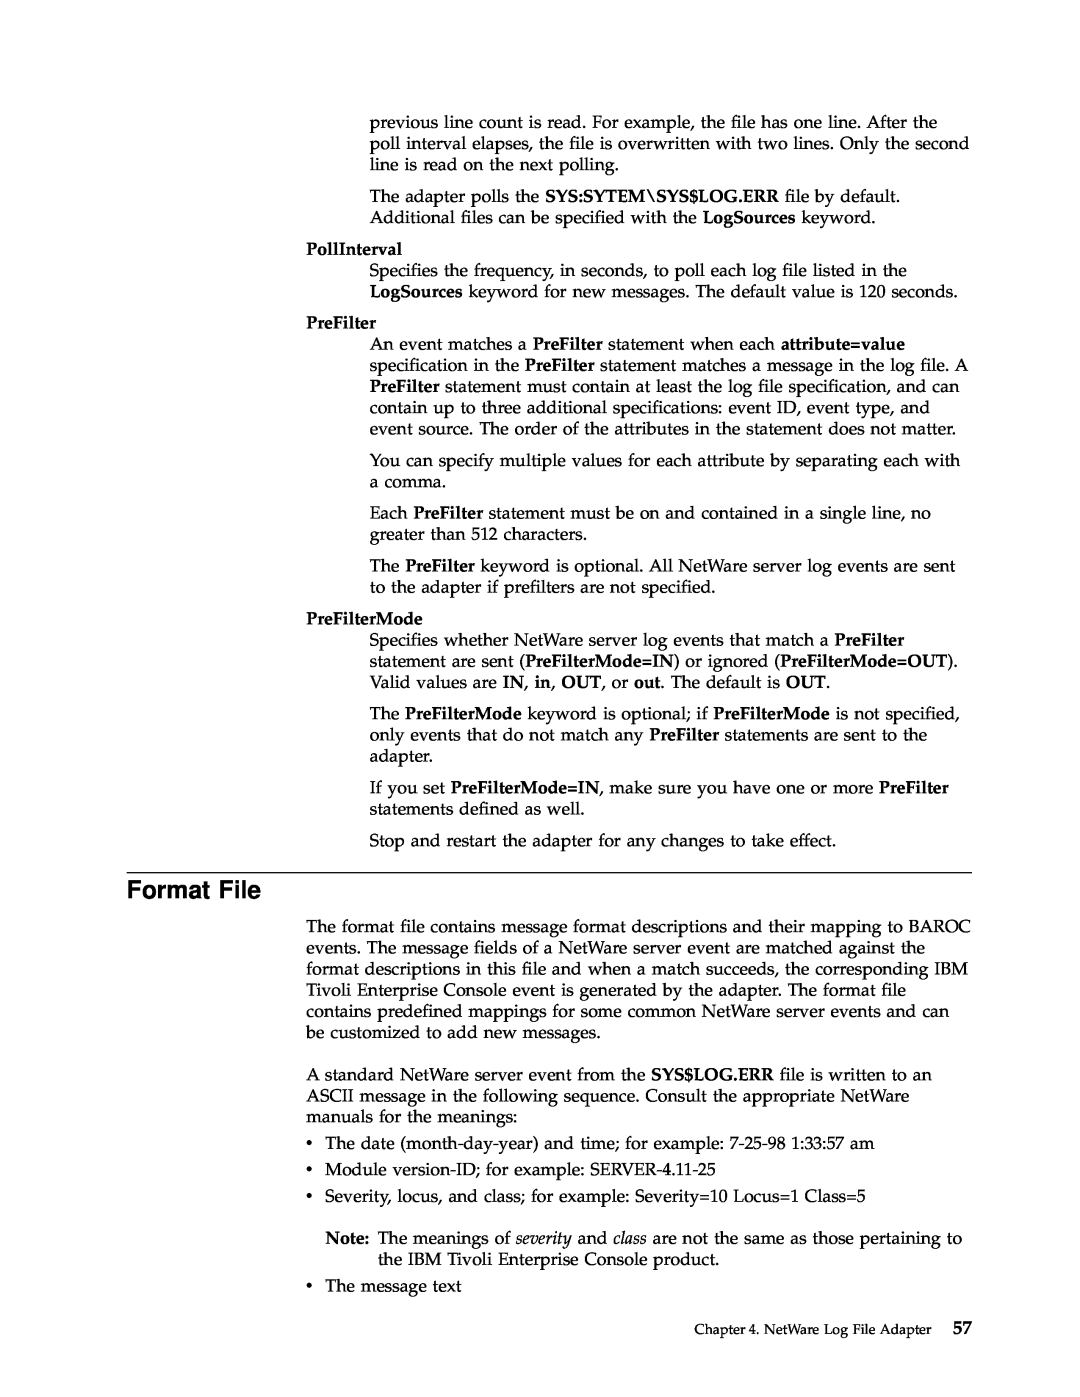 IBM Enterprise Console manual Format File, PollInterval, PreFilterMode 